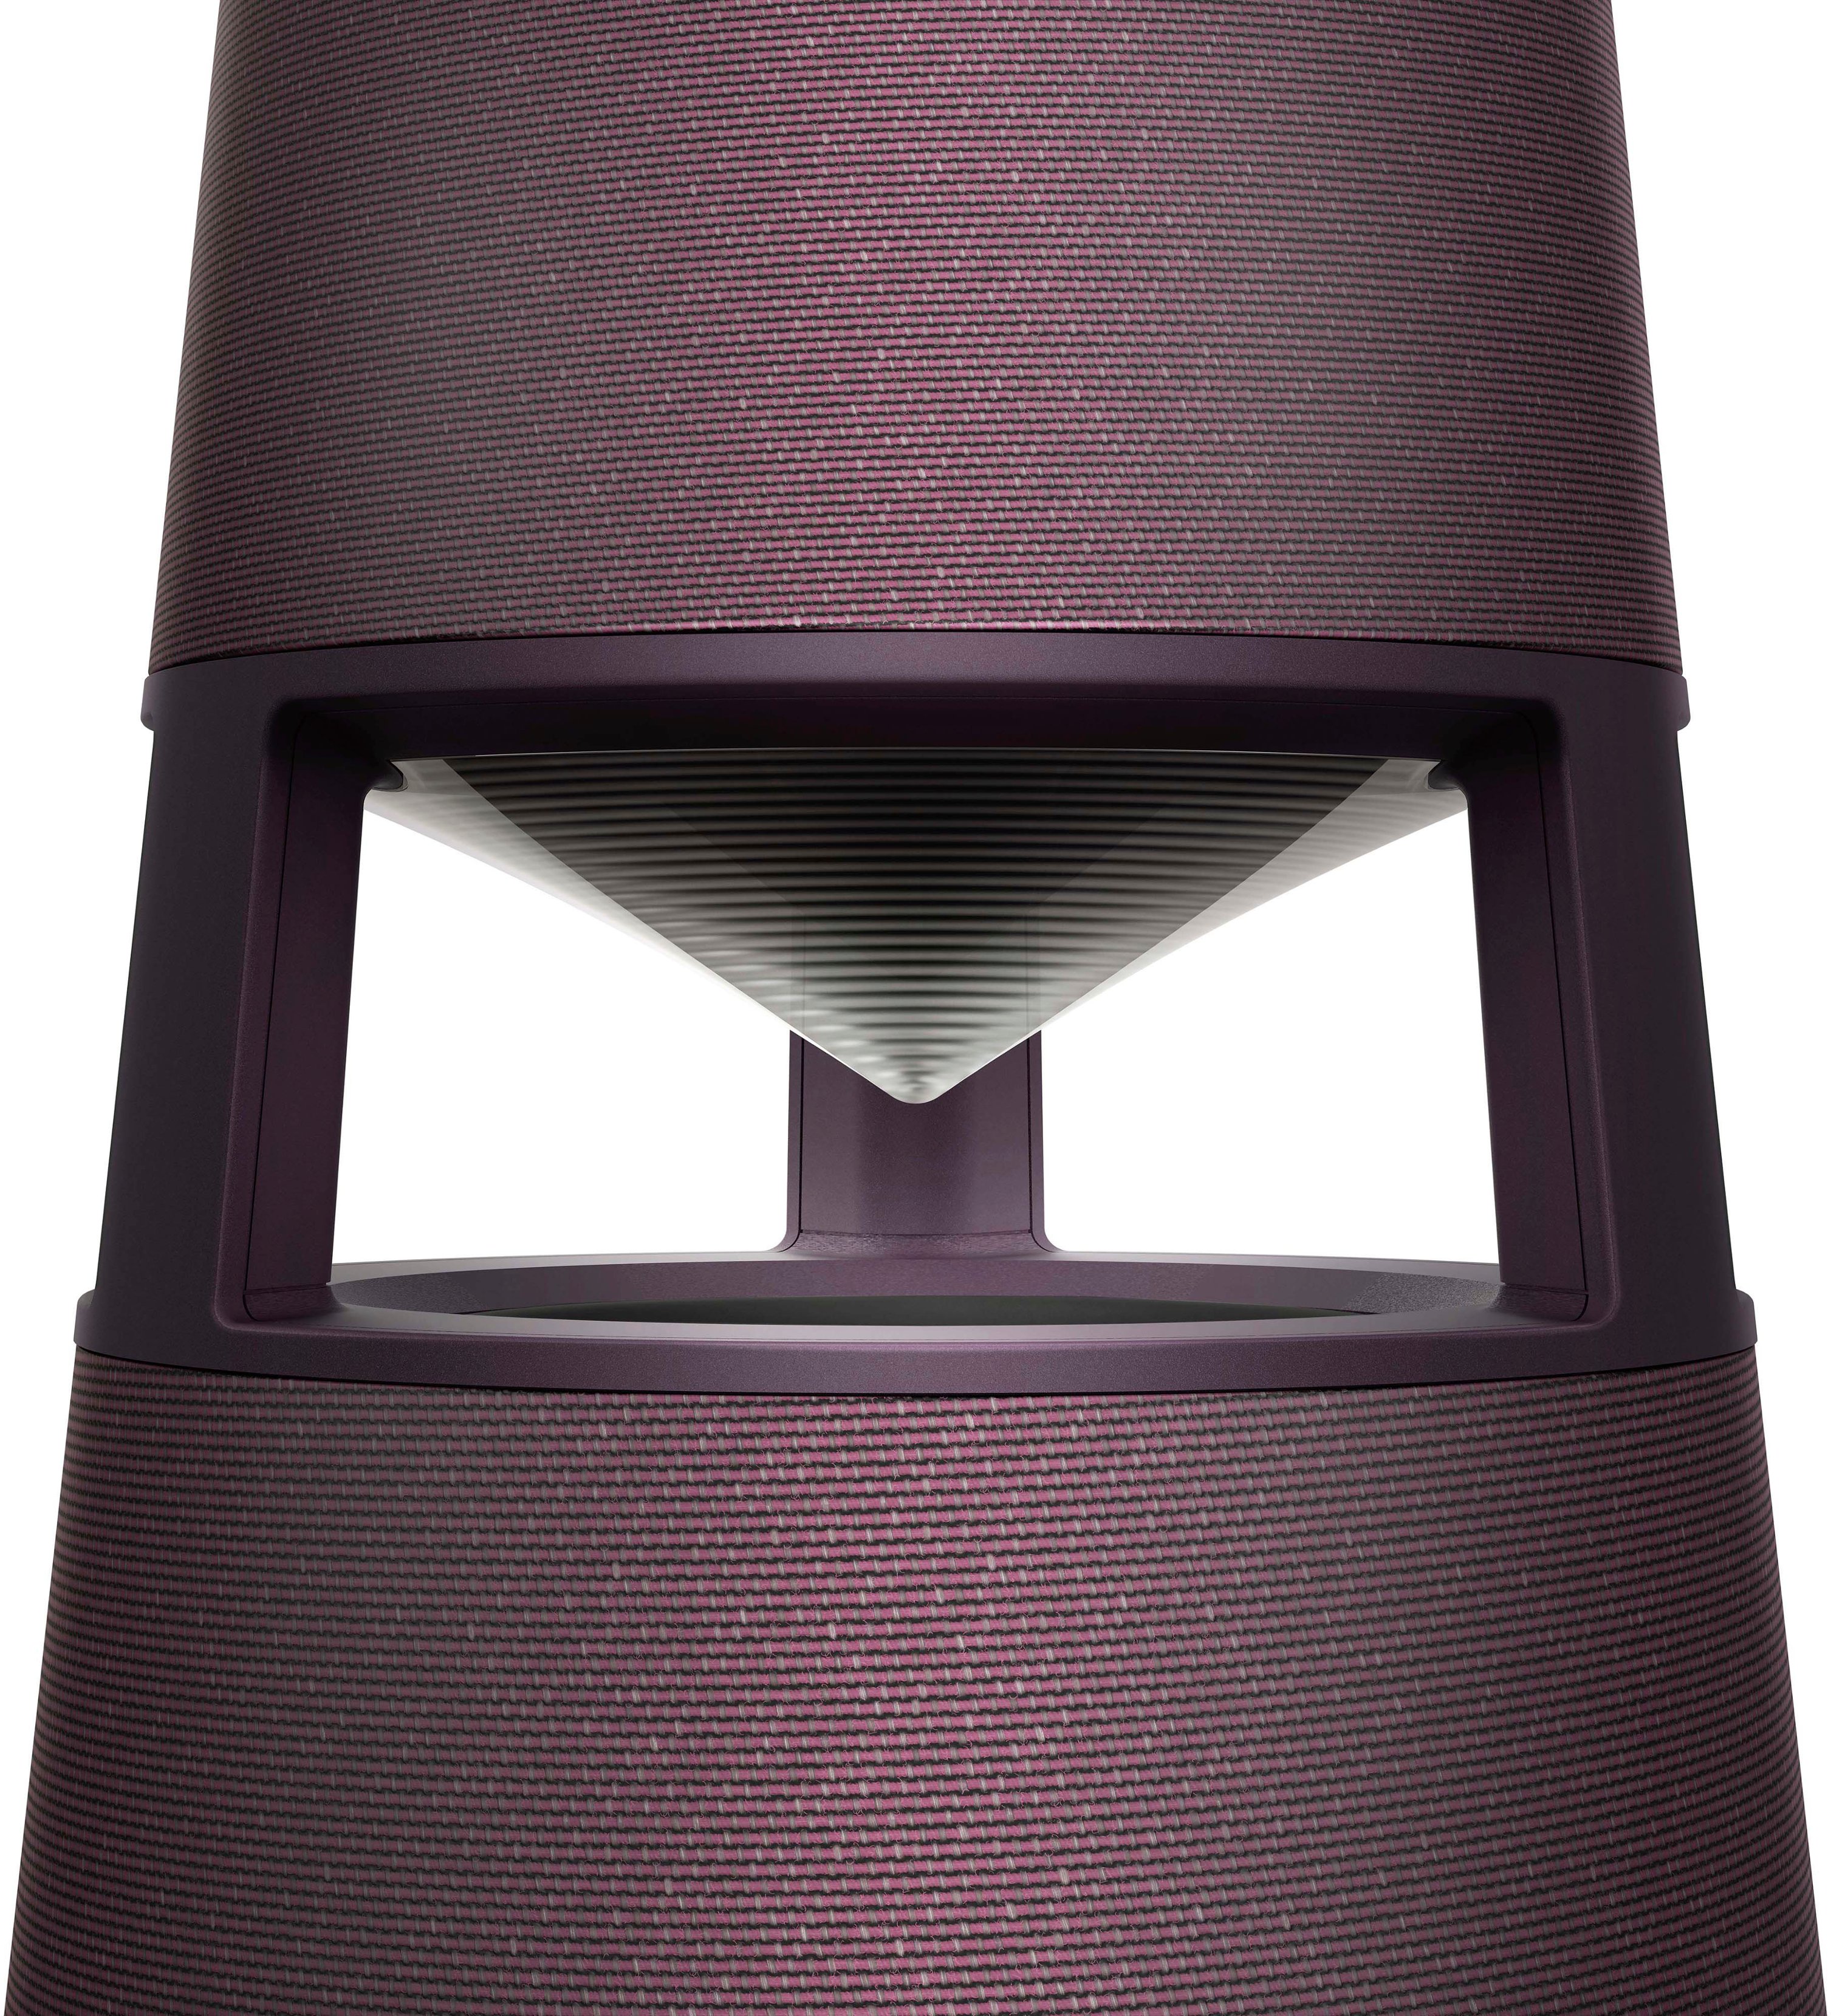 Best Burgundy Buy: XBOOM RP4 Omnidirectional 360 LG Bluetooth Portable Speaker